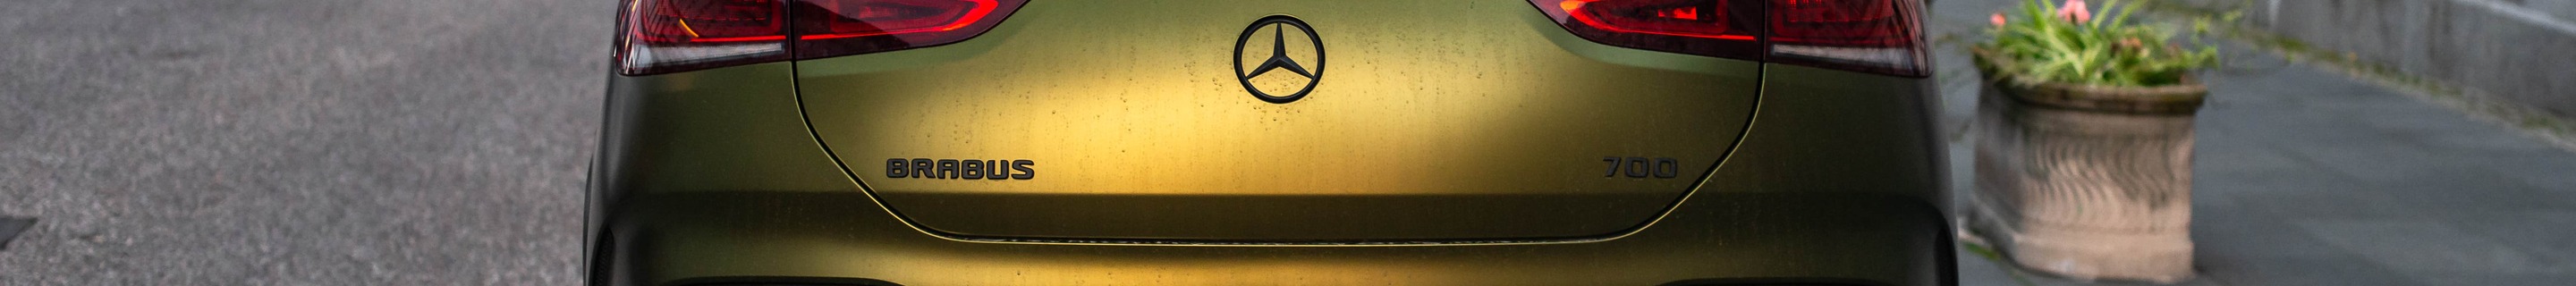 Mercedes-AMG Brabus GLE B40-700 C167